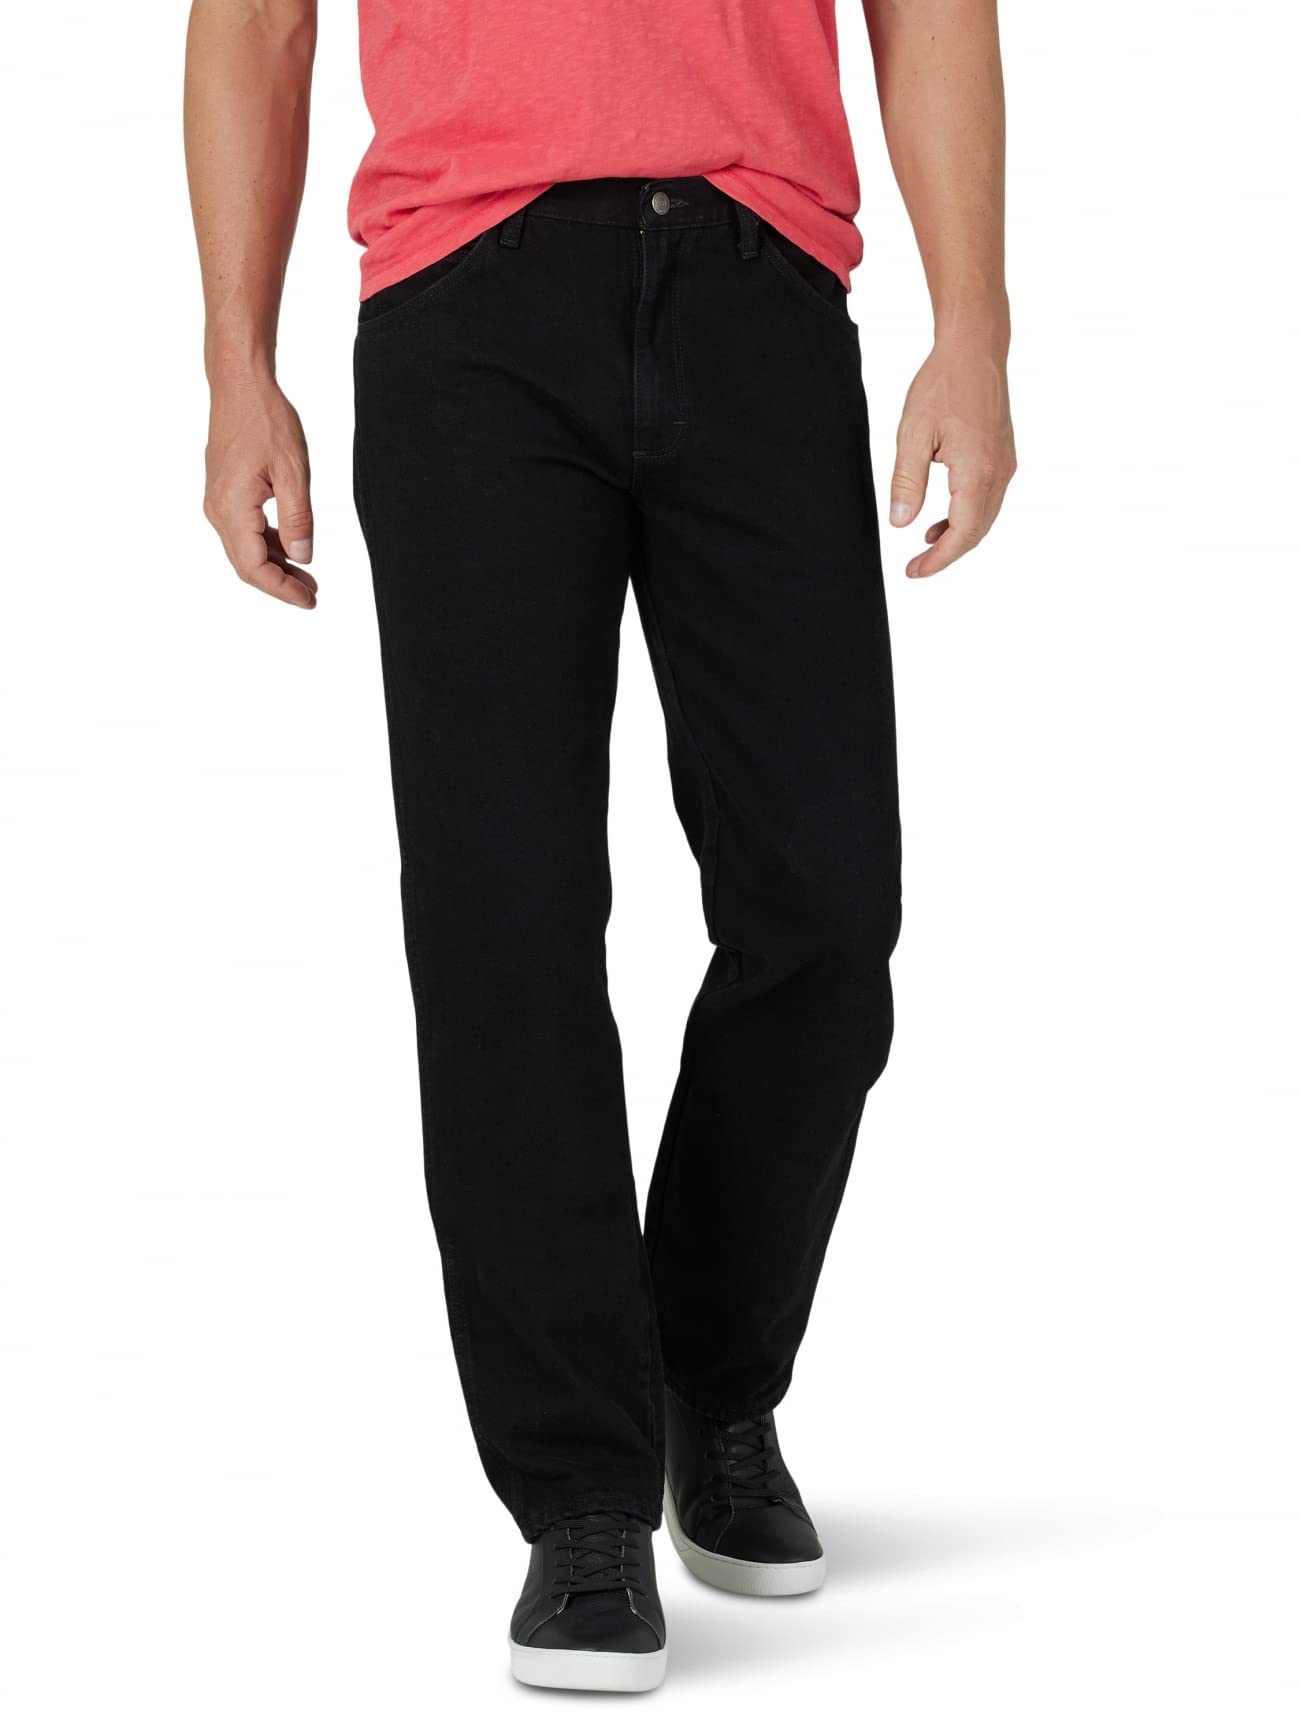 Wrangler Authentics Men's Big & Tall Classic 5-Pocket Regular Fit Cotton Jean, Black, 44W x 30L